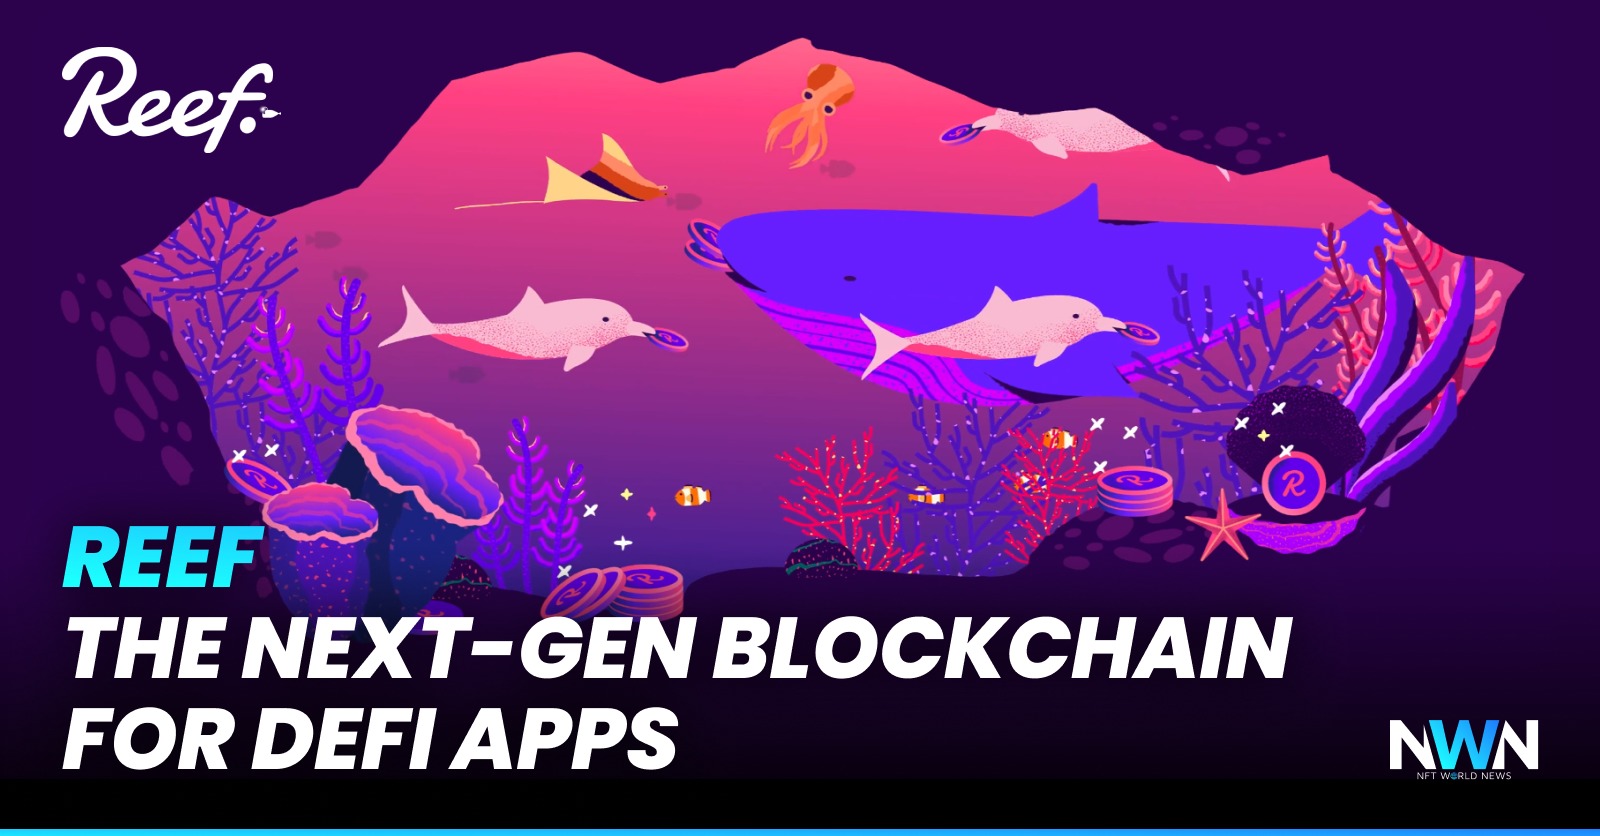 Reef: The Next-Gen Blockchain For DeFi Apps